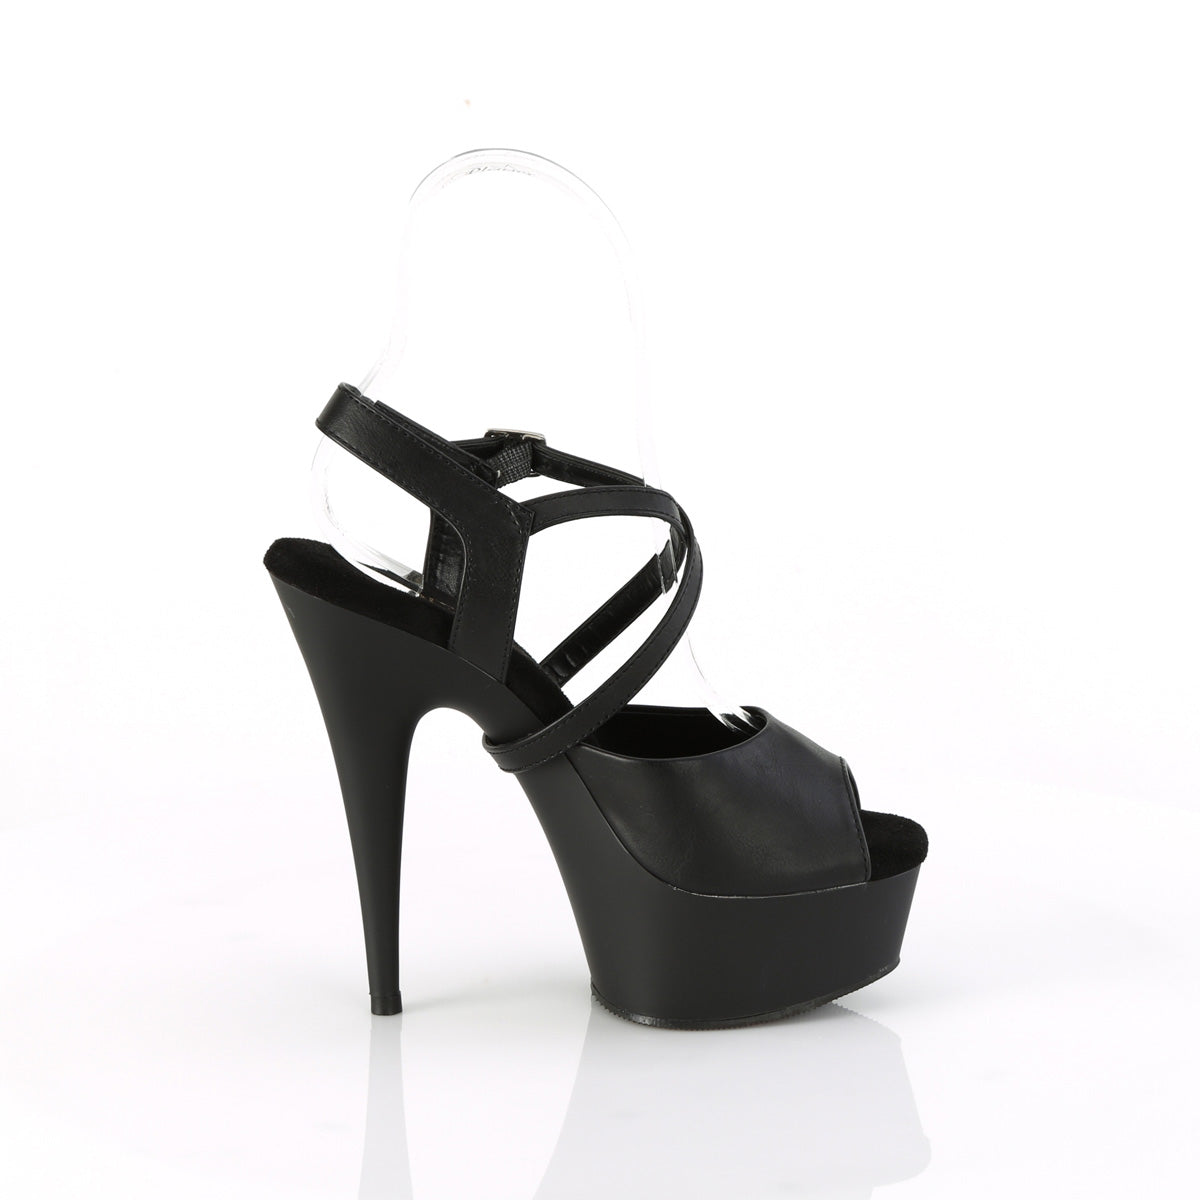 DELIGHT-624-1 Black Ankle Sandal High Heel